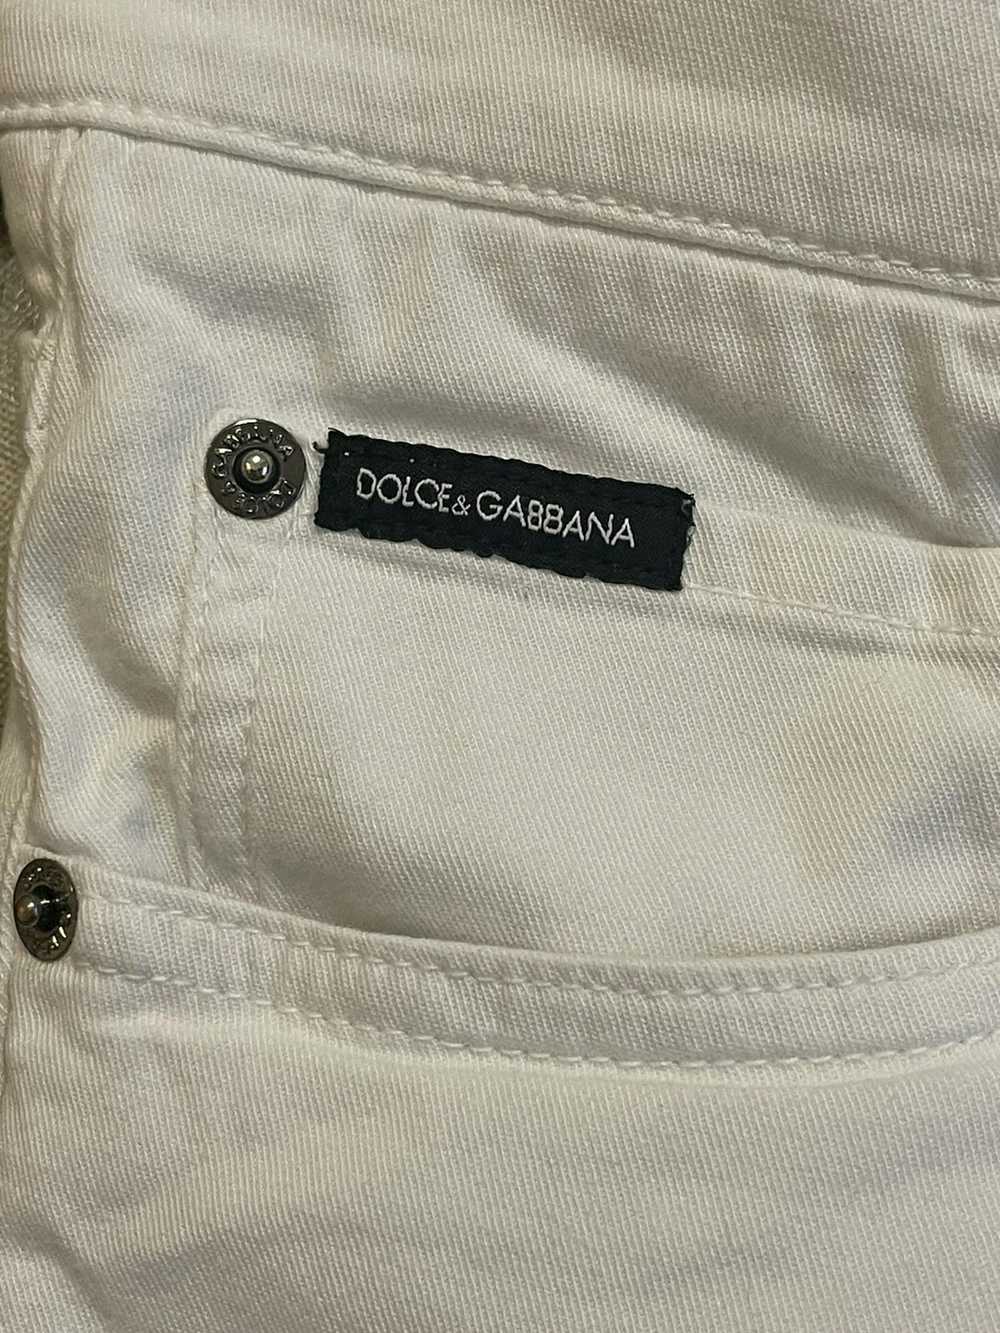 Dolce & Gabbana Dolce & Gabbana denim skinny jeans - image 6